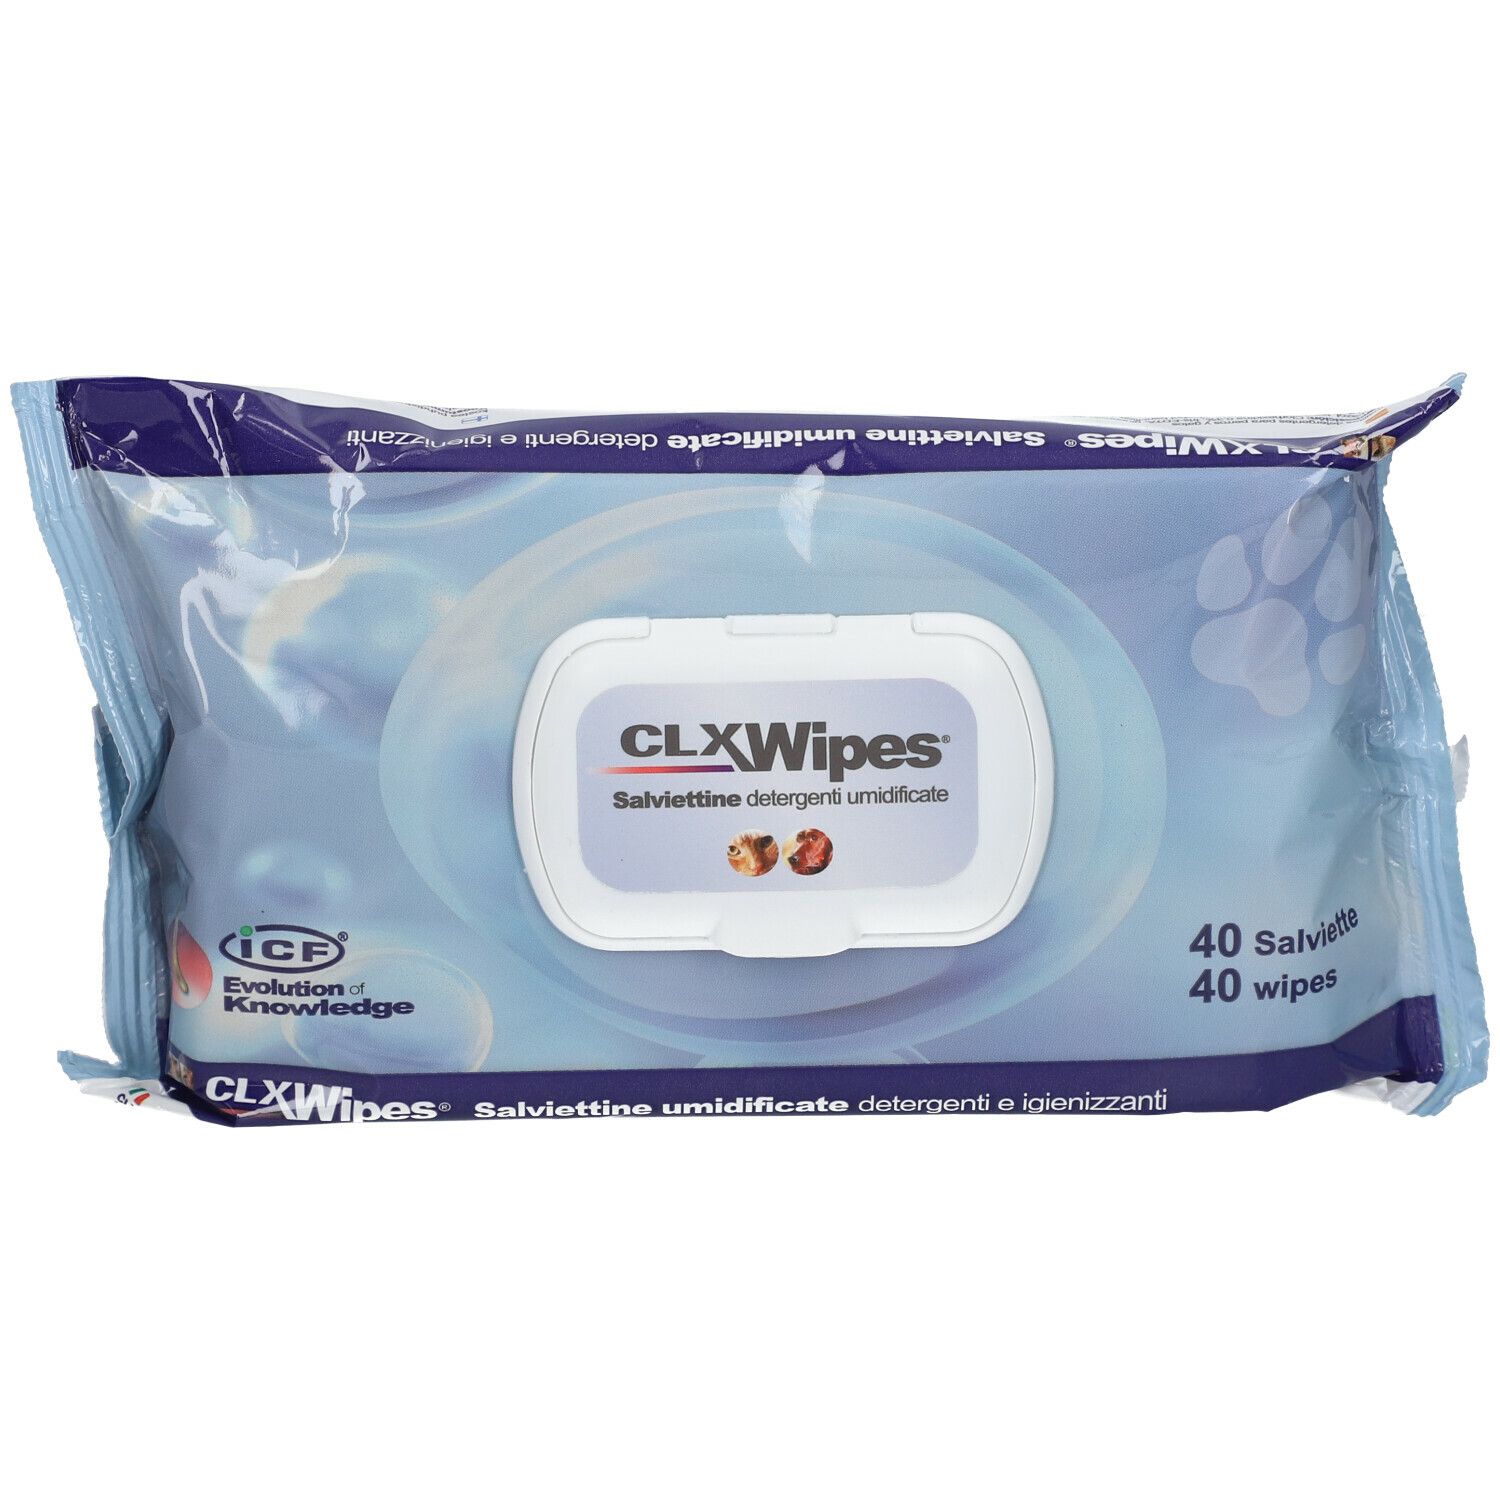 clx wipes salviettine detergenti umidificate